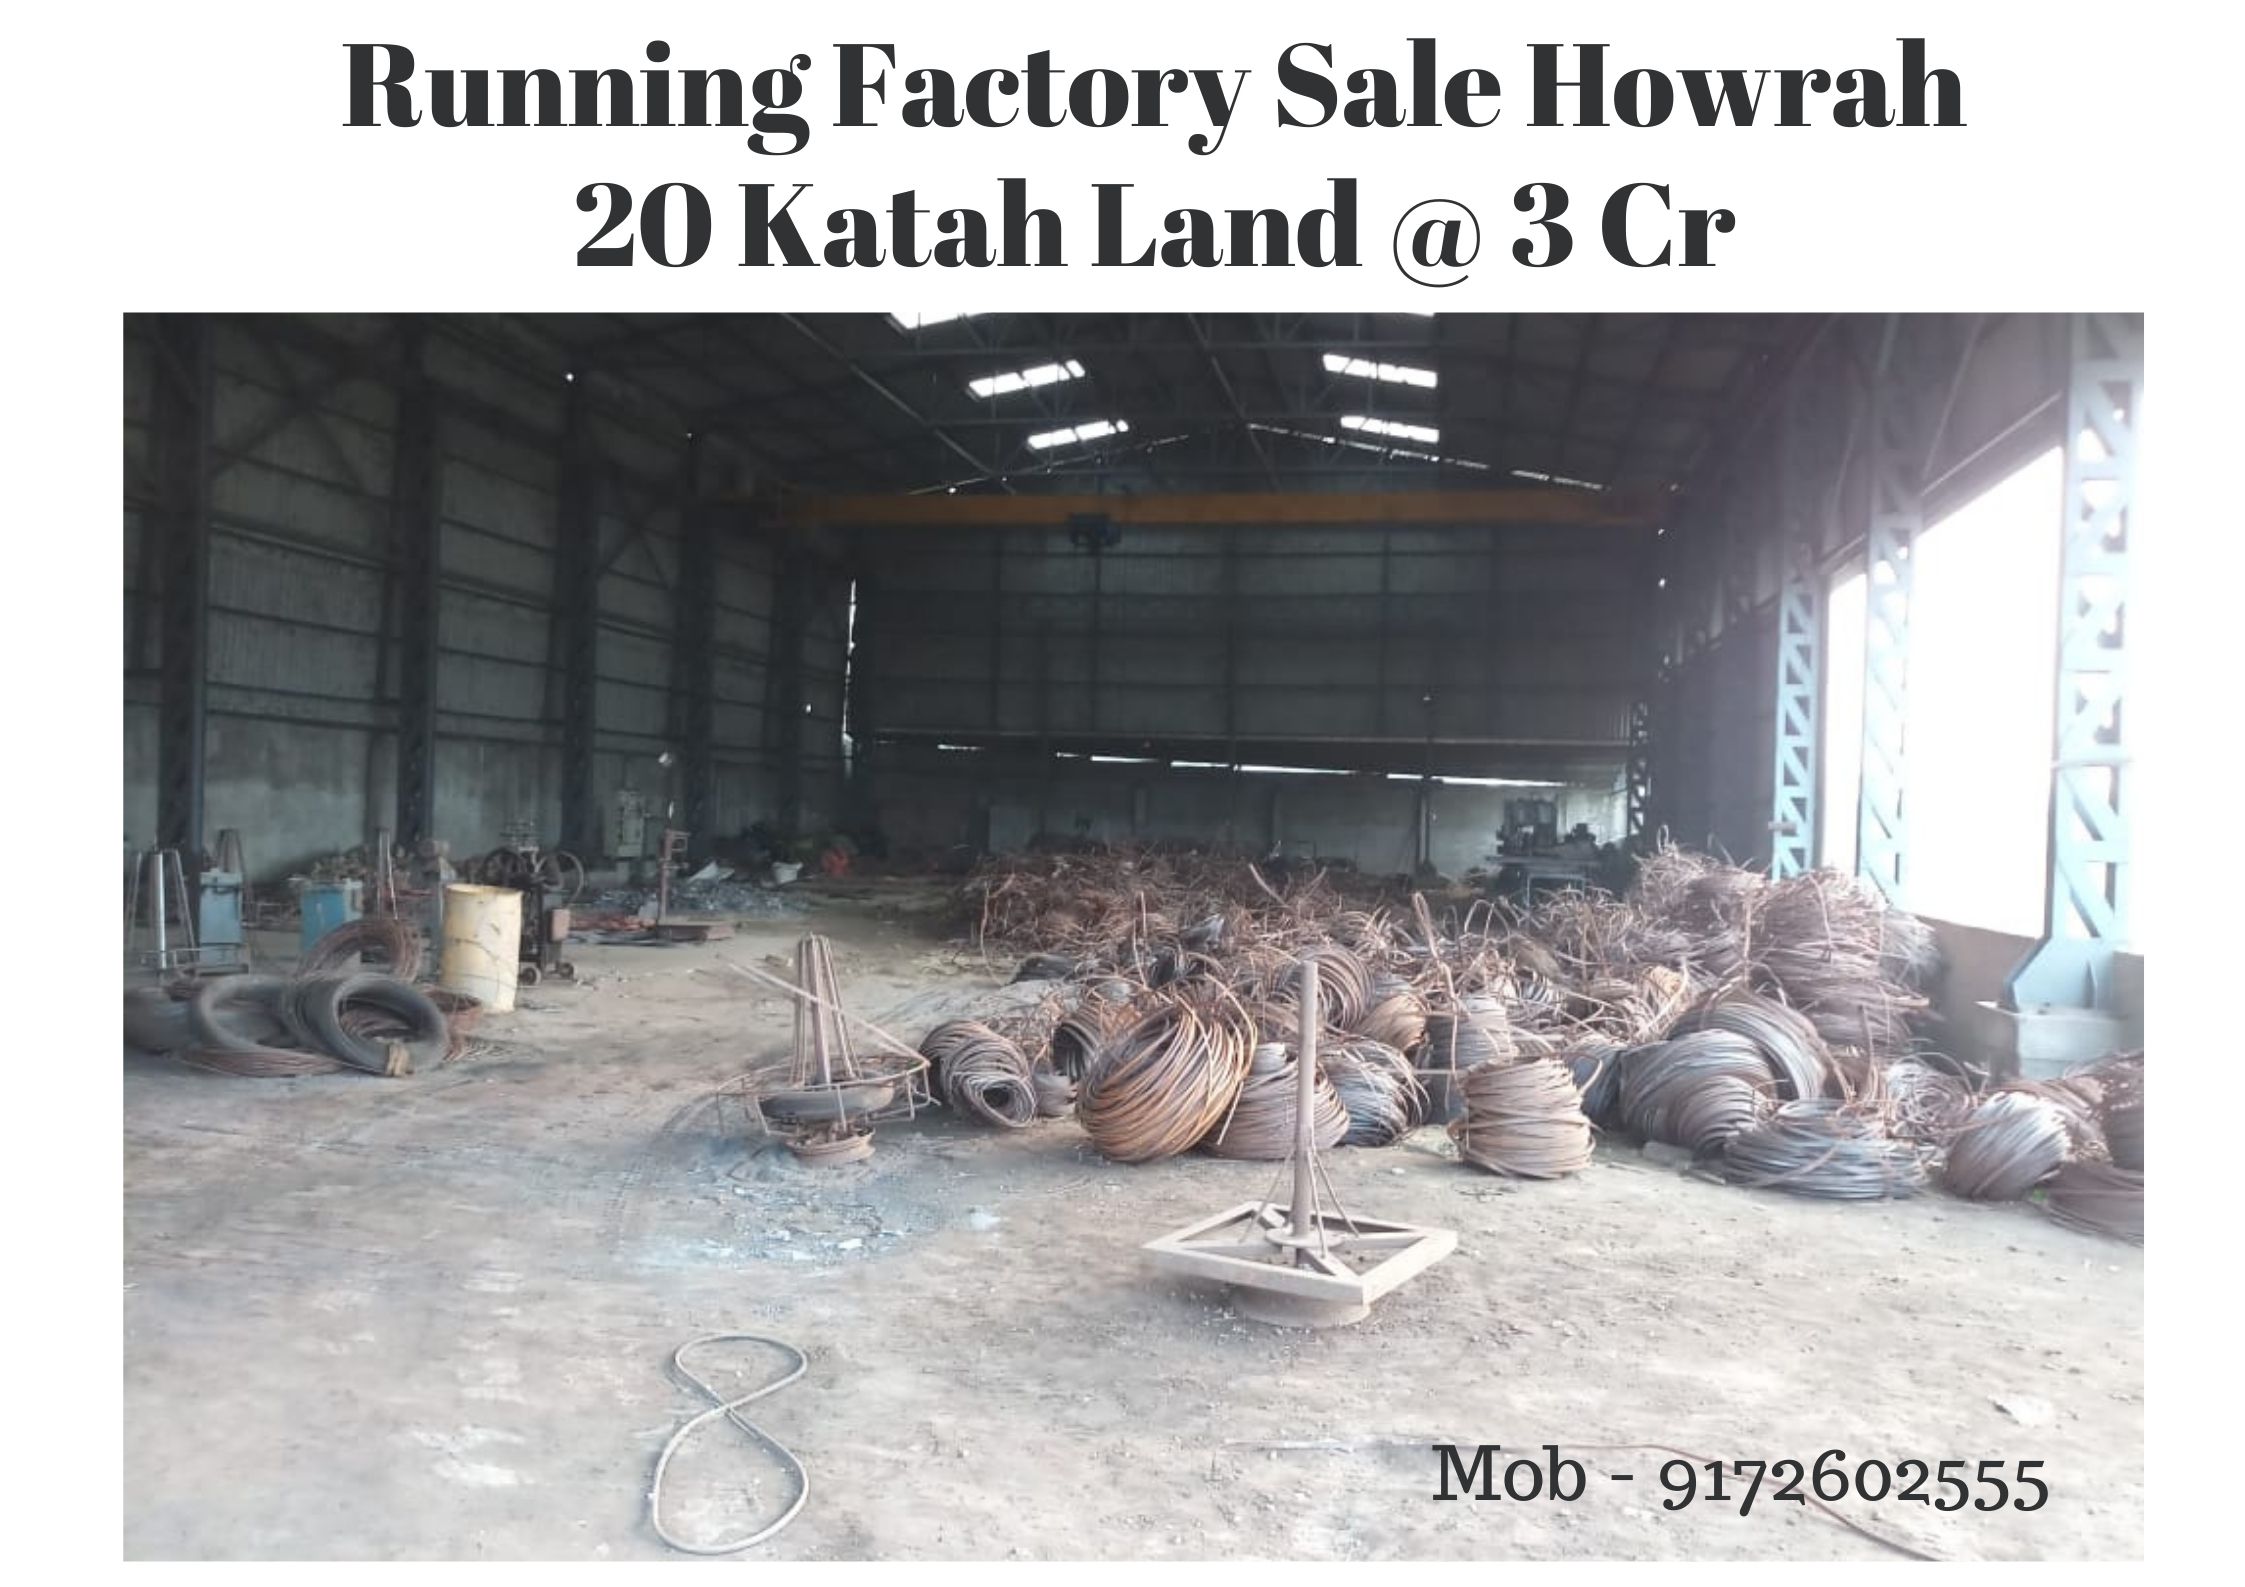 Howrah Running Factory Sale